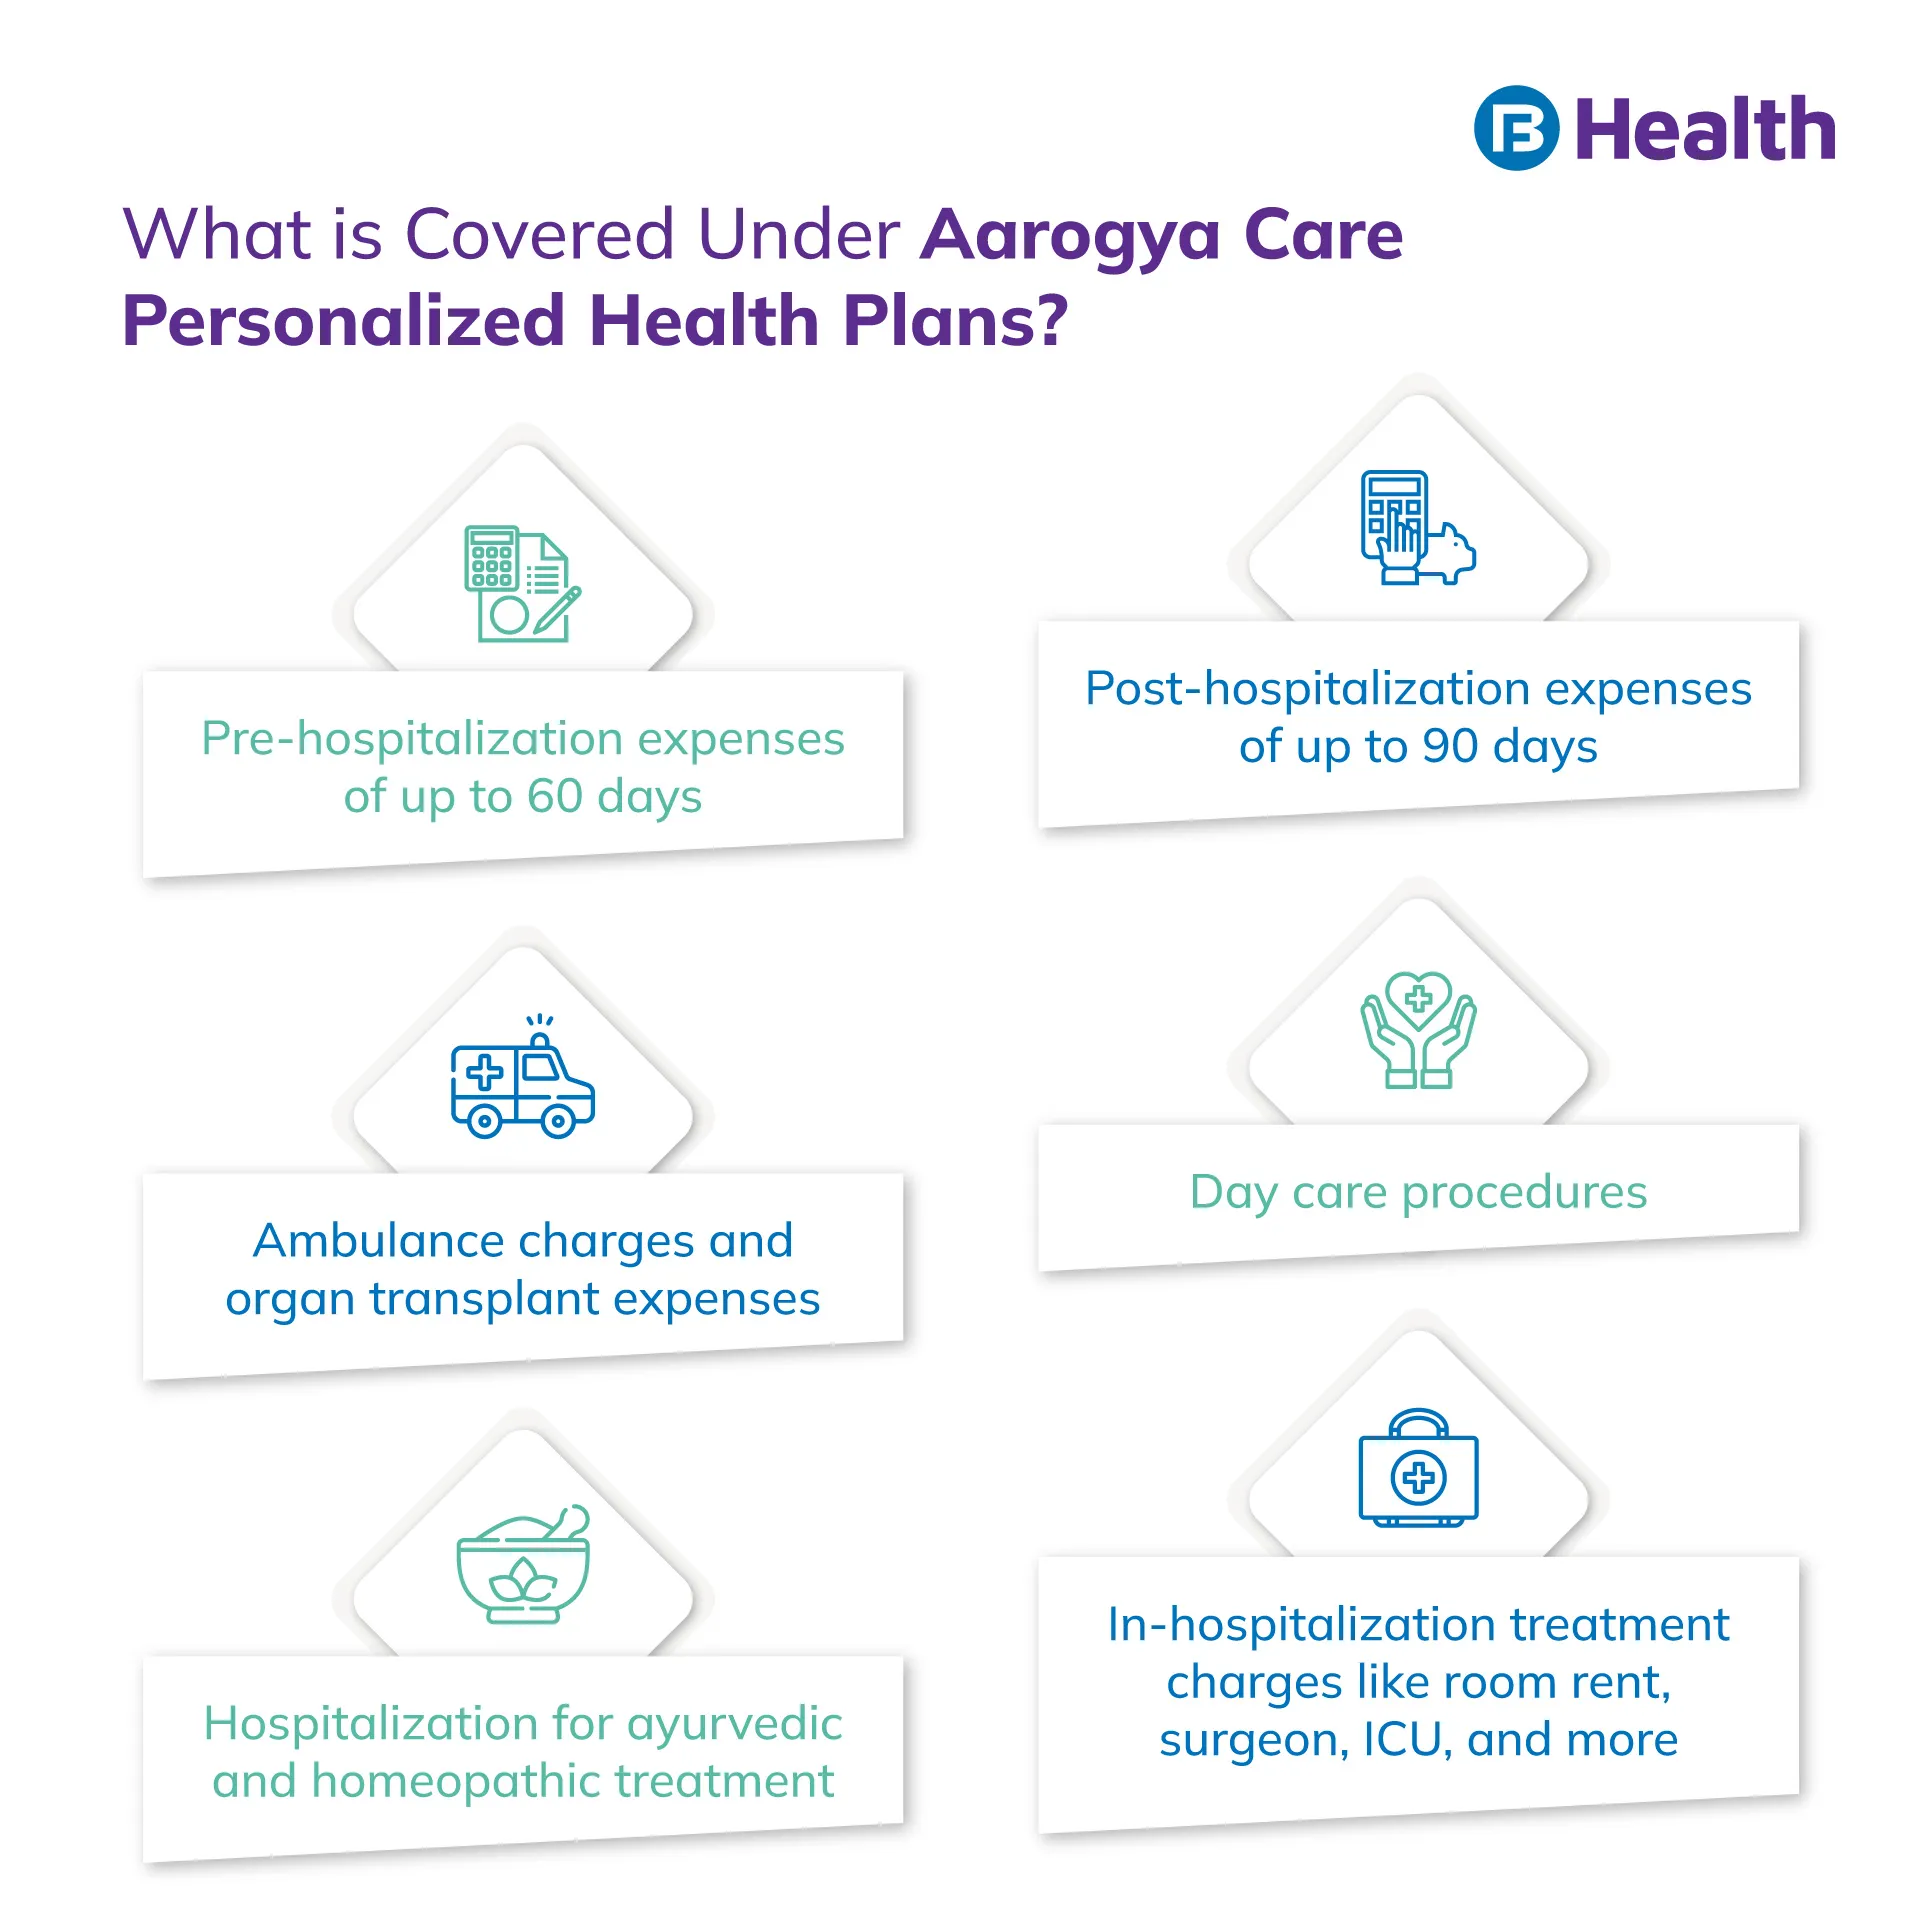 Aarogya Care Personalized Health Plan